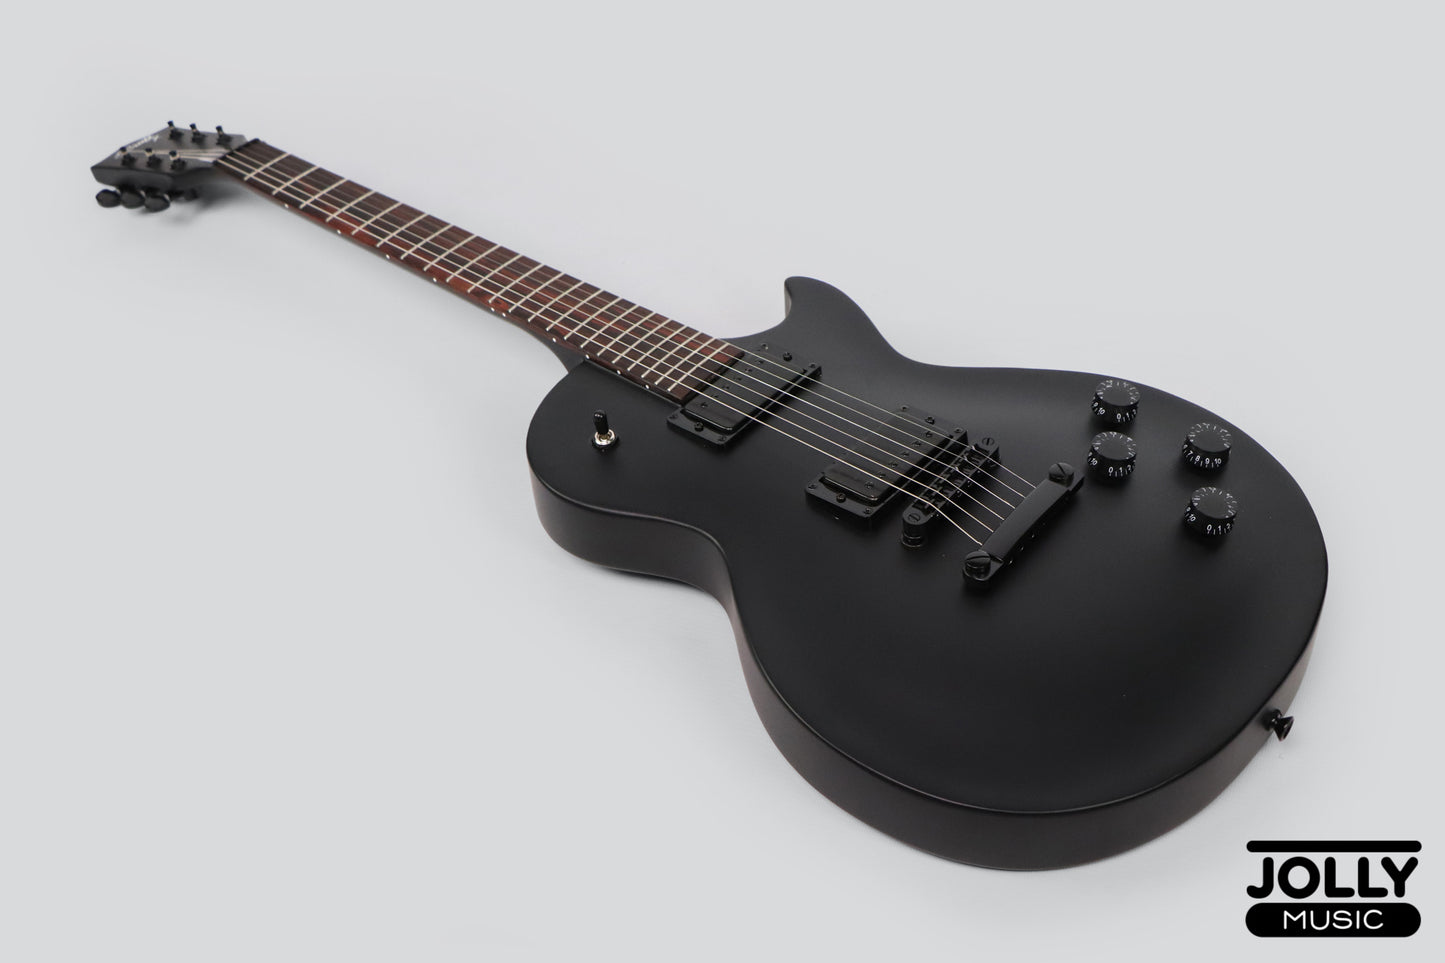 JCraft X LPX-2 Single Cut Mahogany Body Archtop Electric Guitar - Shadow